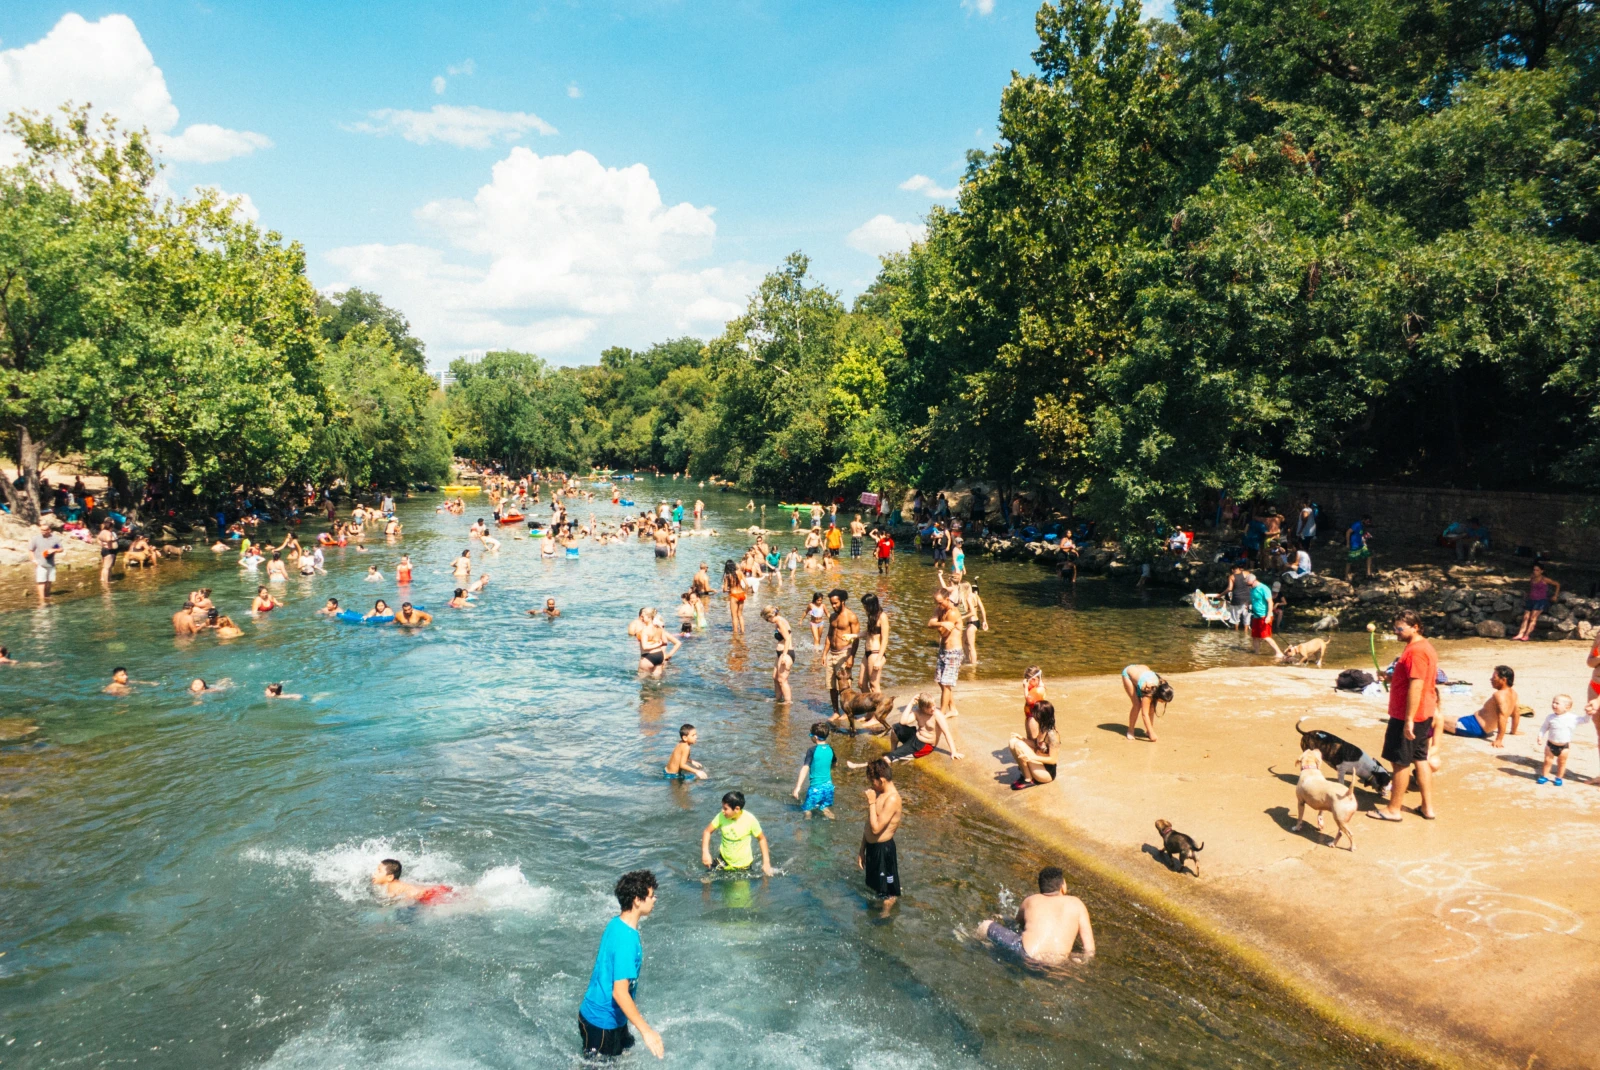 People swimming in the Barton Springs Pool in Austin, Texas